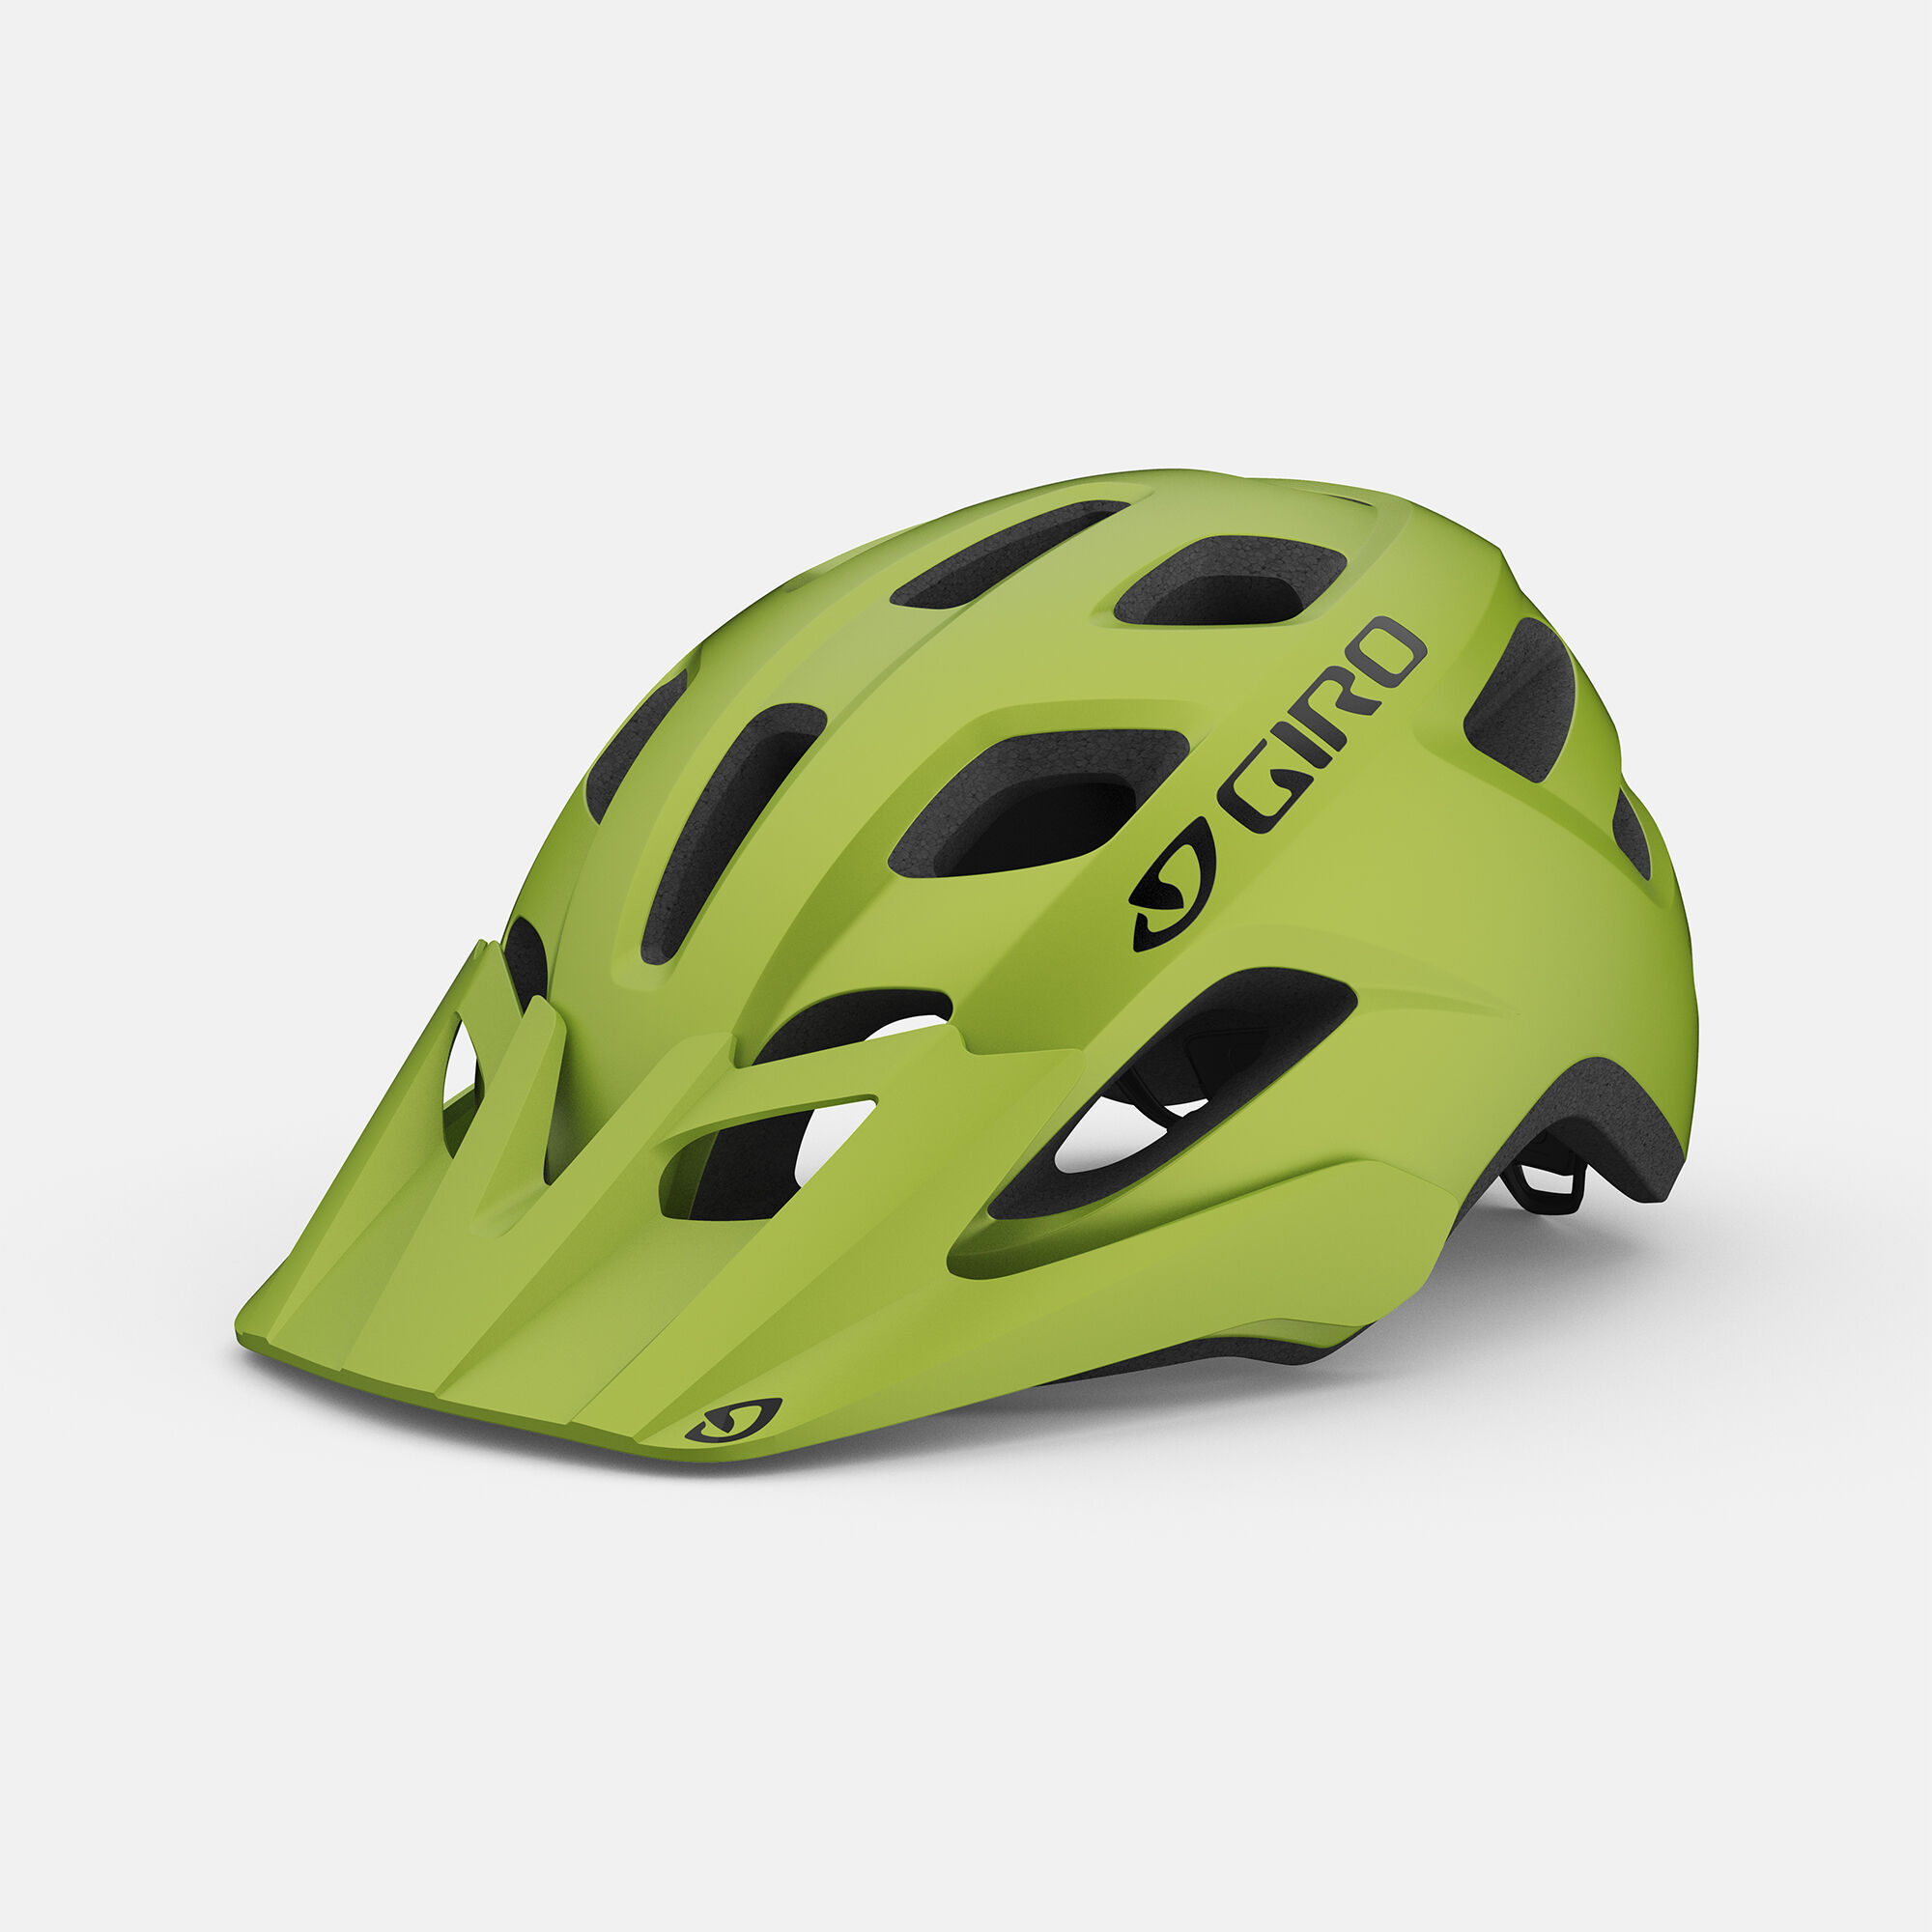 =Mountain Bike Road Helmet Adjustable Men Women Adults Sports Cycling Bicycle UK 